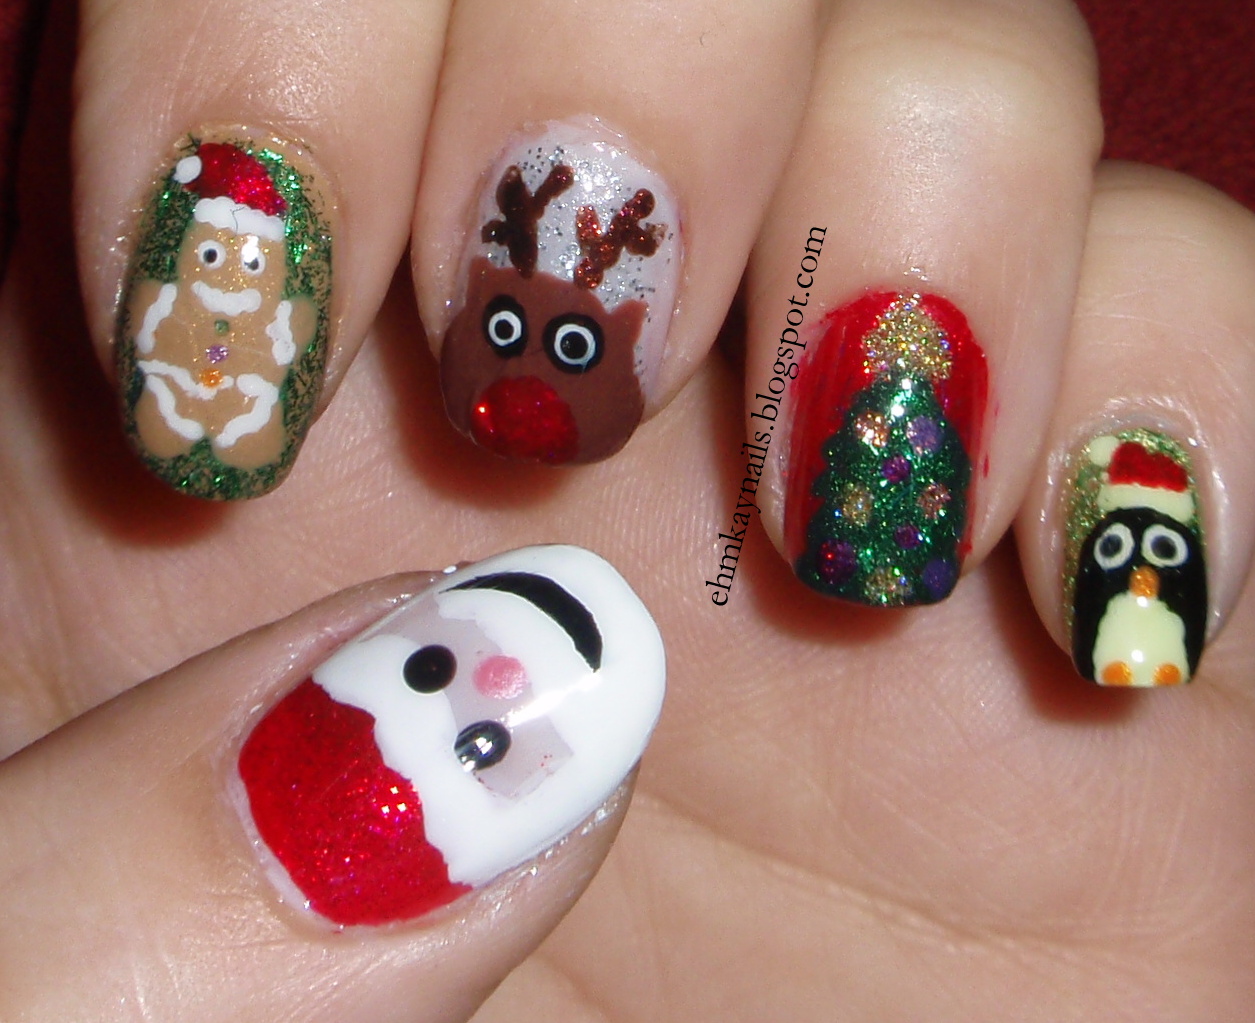 ehmkay nails: Blast from the Past: Christmas Character Nail Art